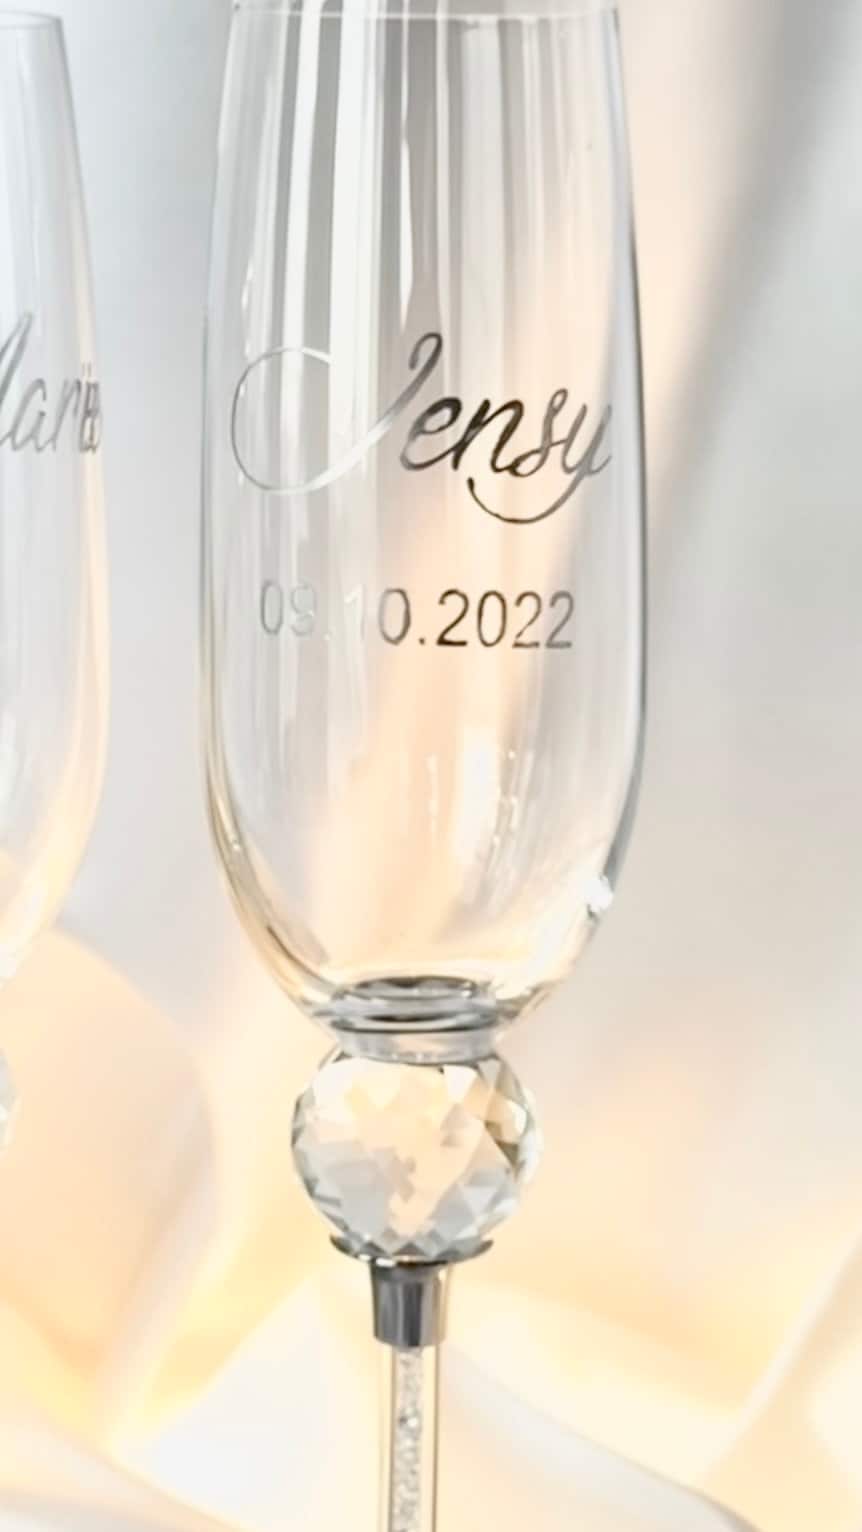 Grandeeza Crystal Flutes, Wedding Glasses, Etched Toasting Glasses